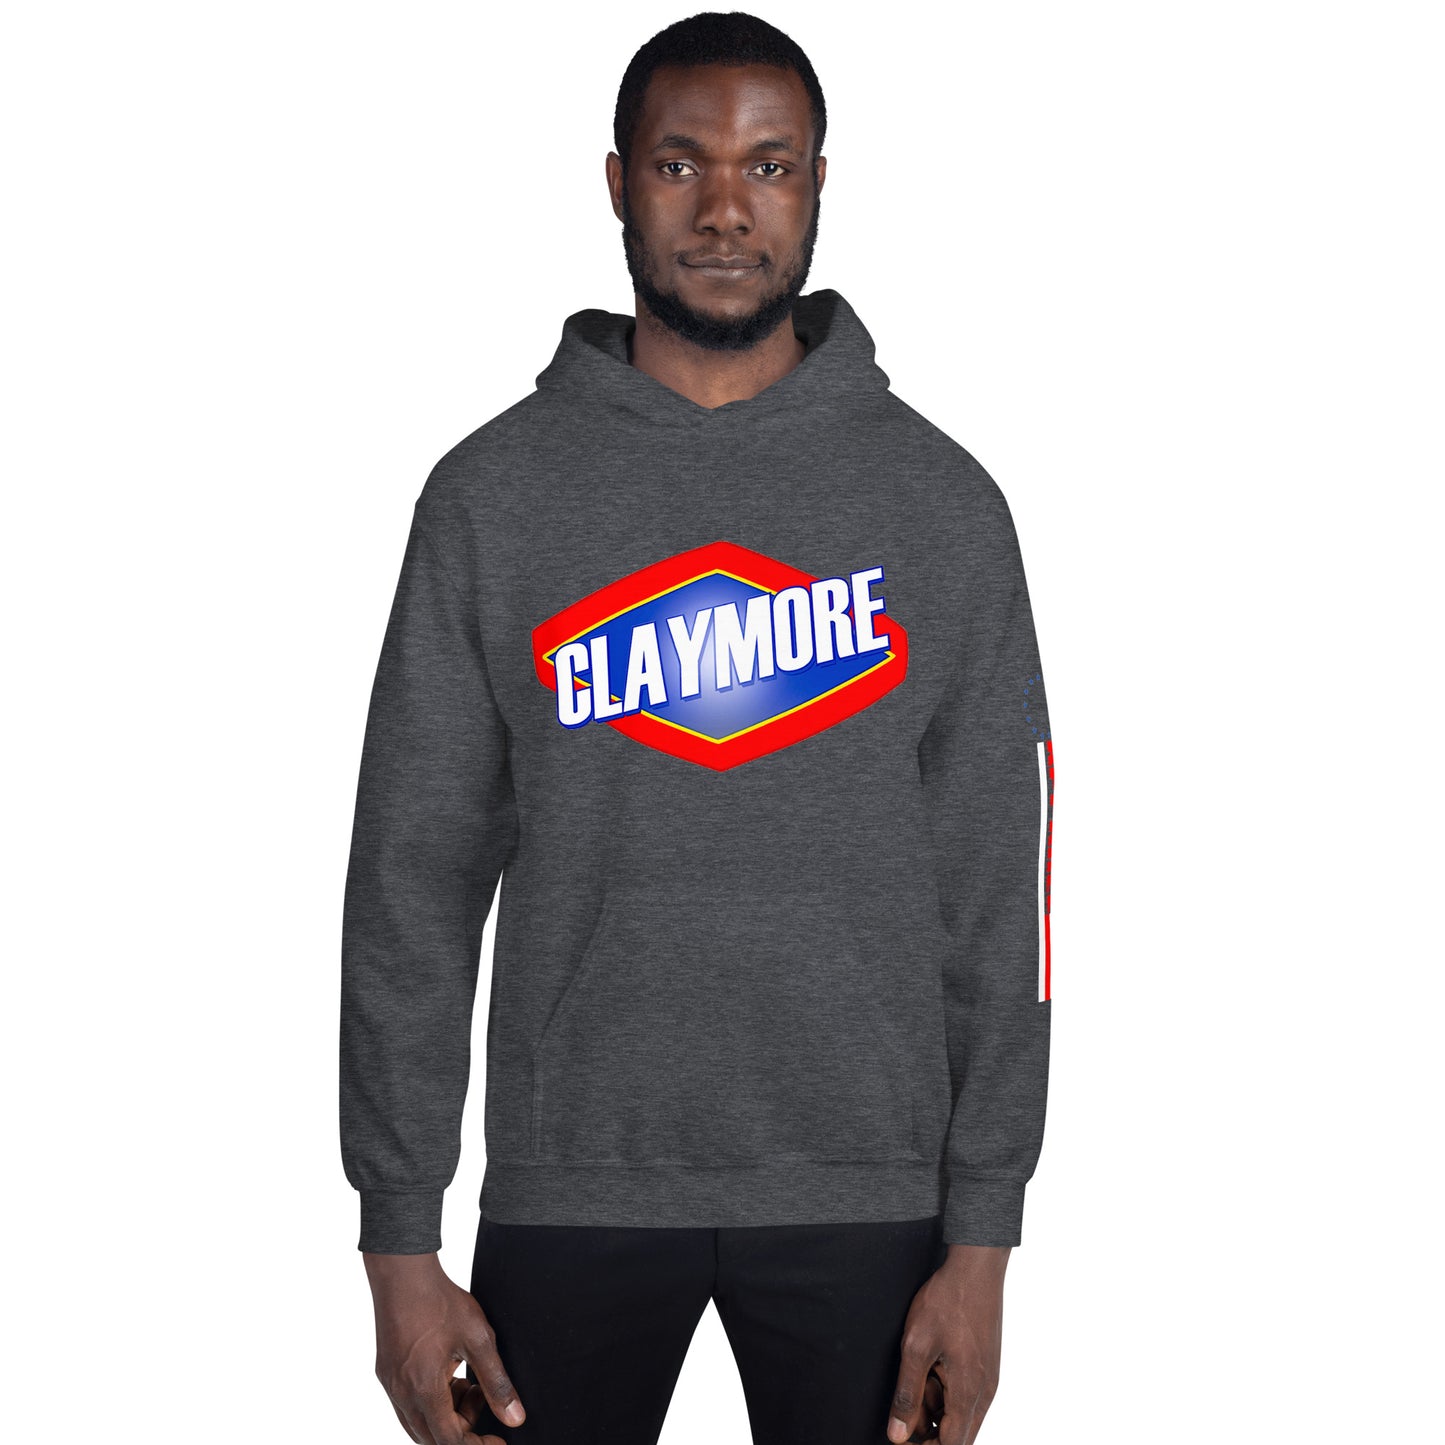 CLAYMORE- Bleachin’ Bodies Unisex Hoodie